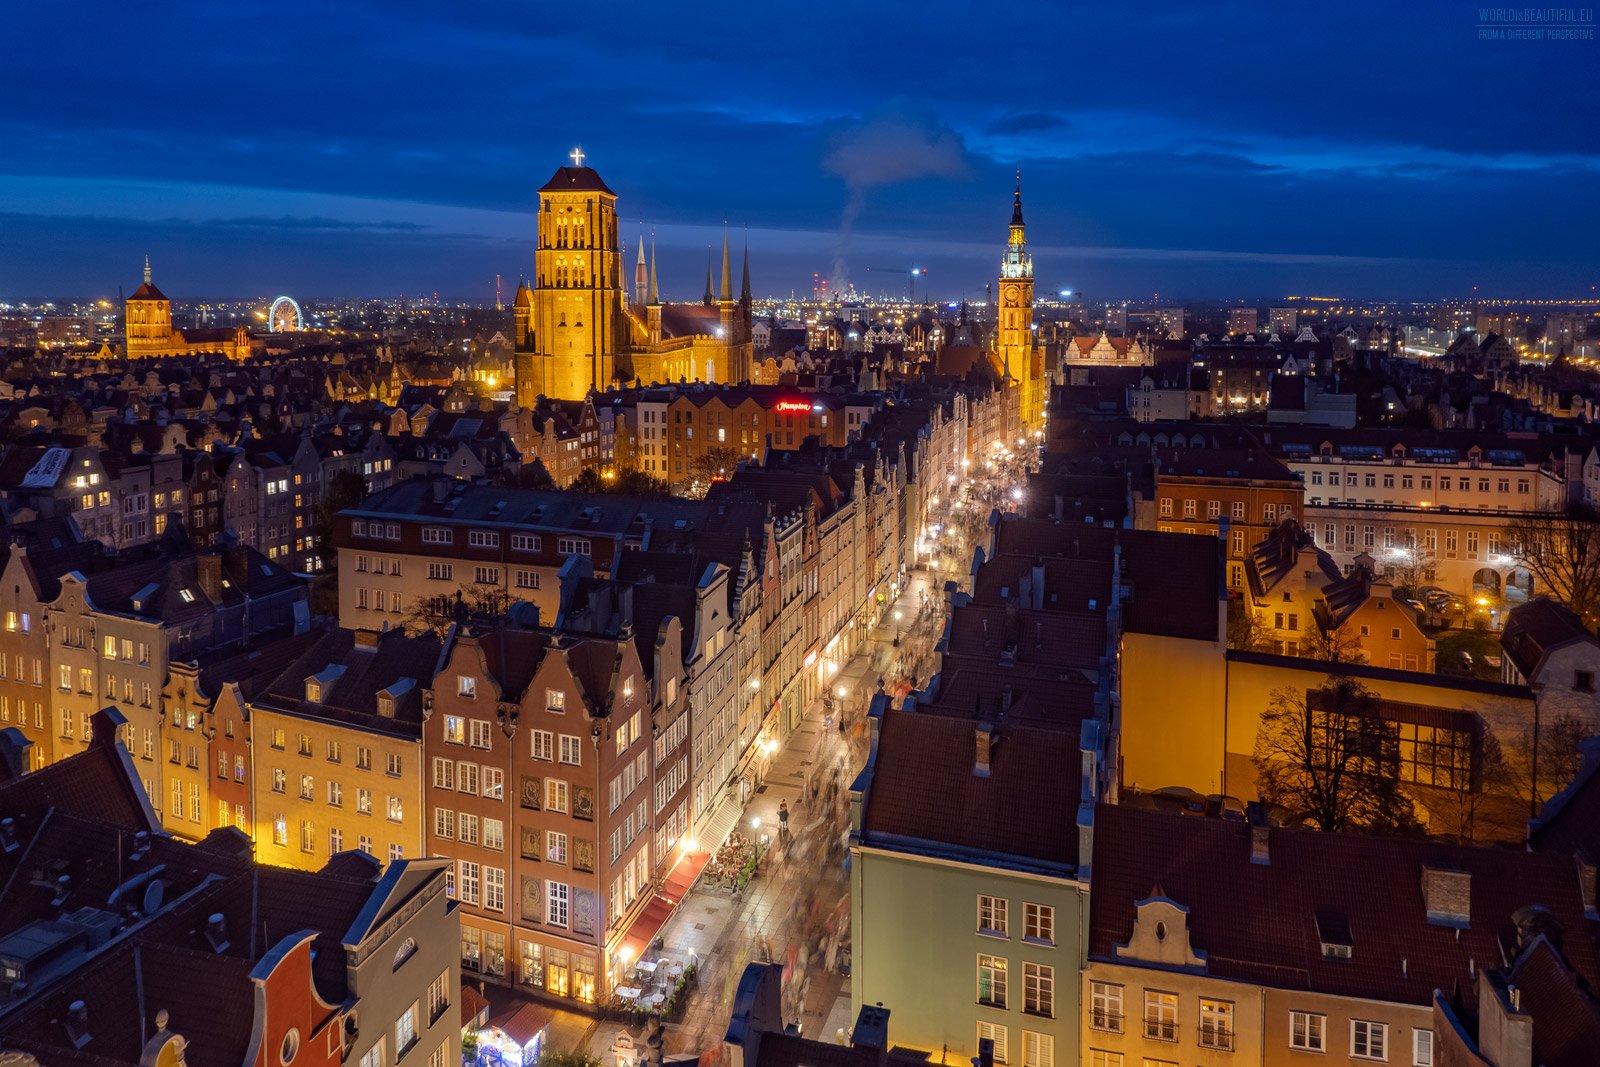 Evening in Gdansk